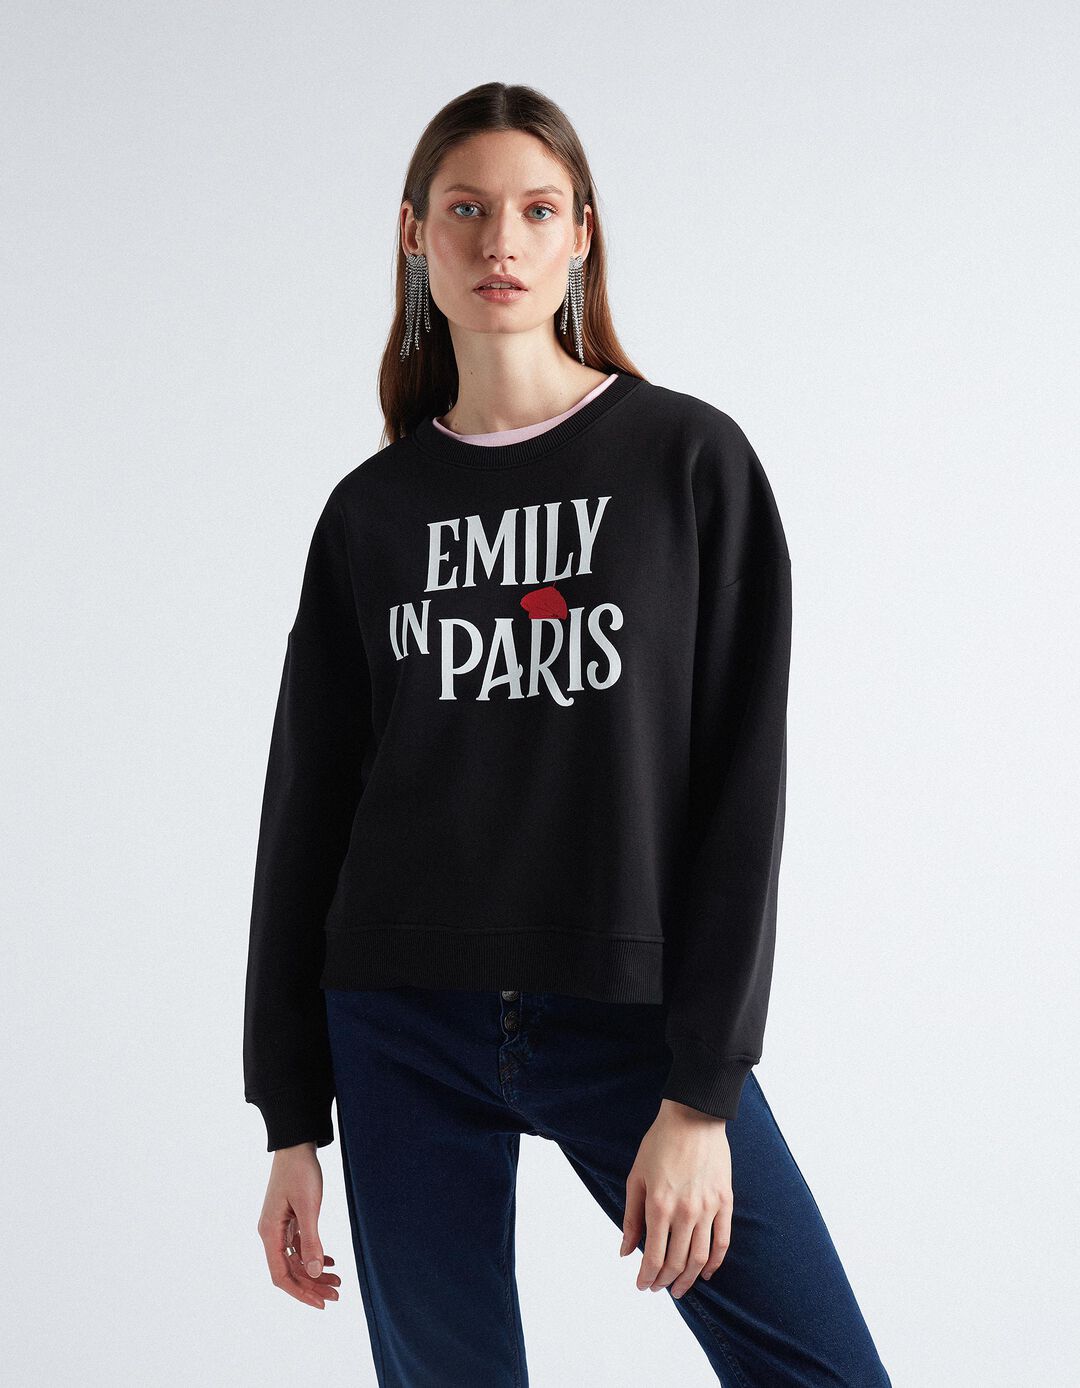 Emily in Paris' Sweatshirt, Women, Black